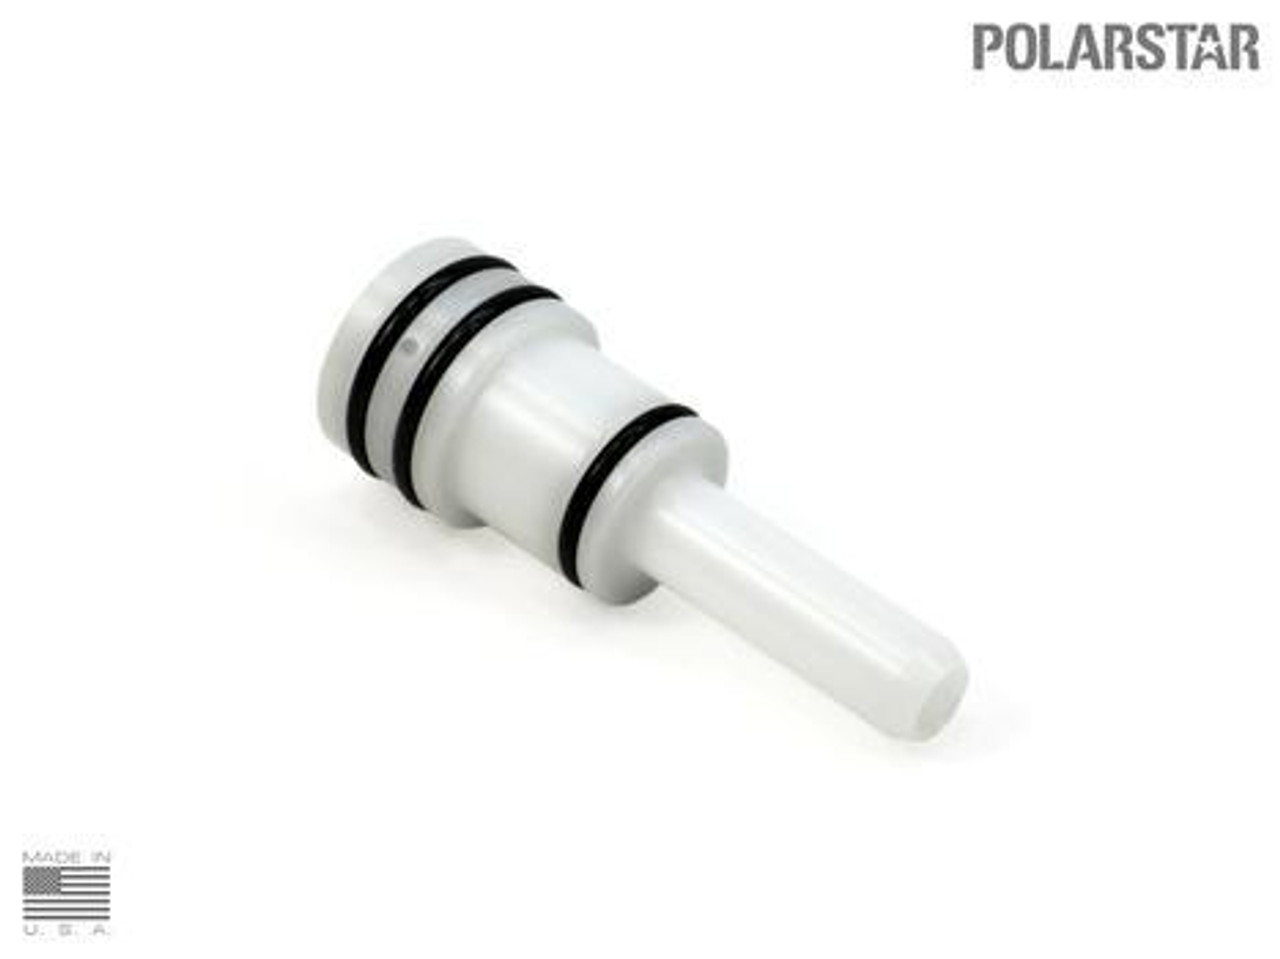 Polarstar F1 Nozzle #12 (LCT AK)